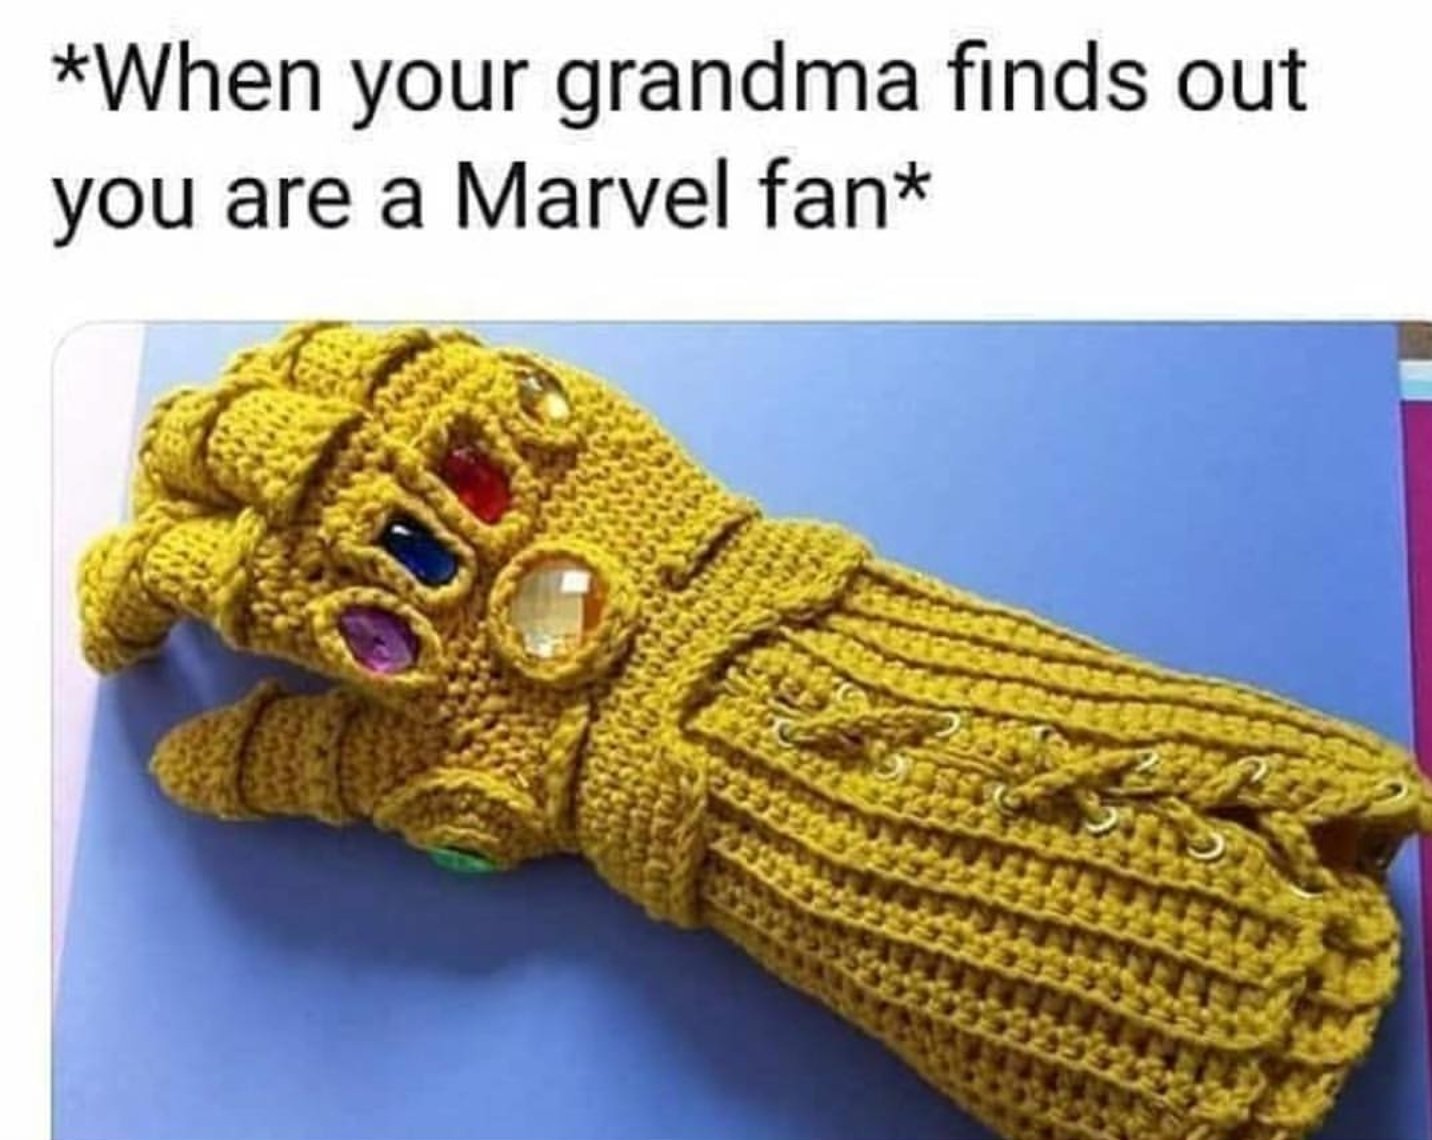 I miss my grandma - meme